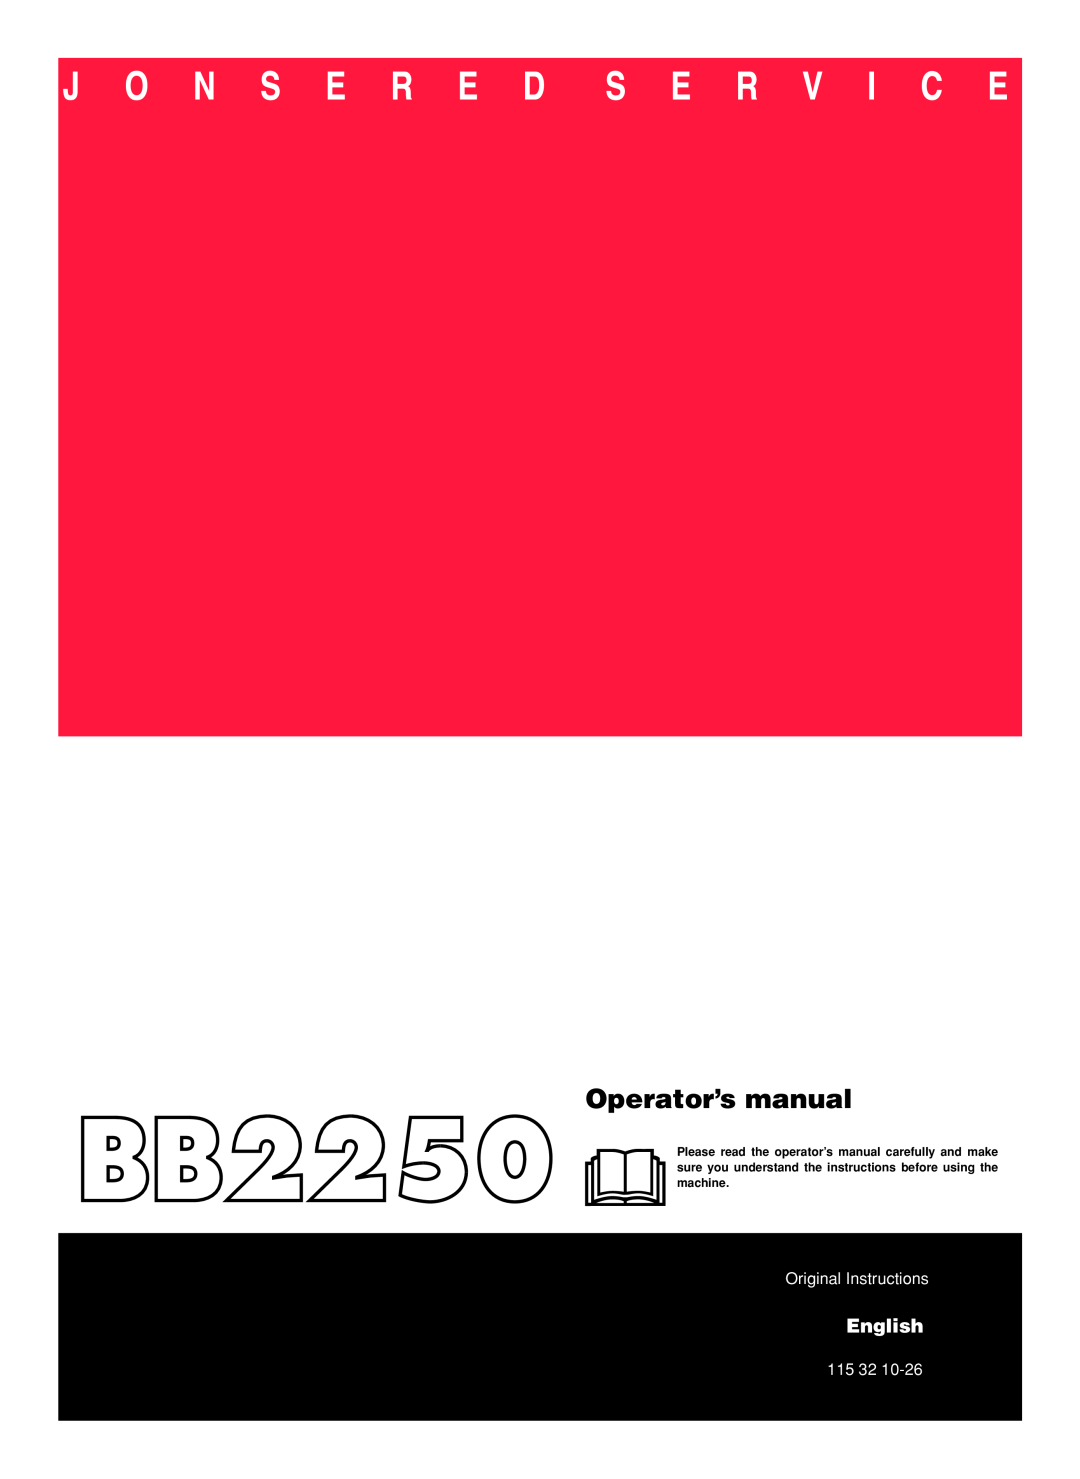 Jonsered BB2250 manual Operator’s manual, English, Original Instructions, 115 